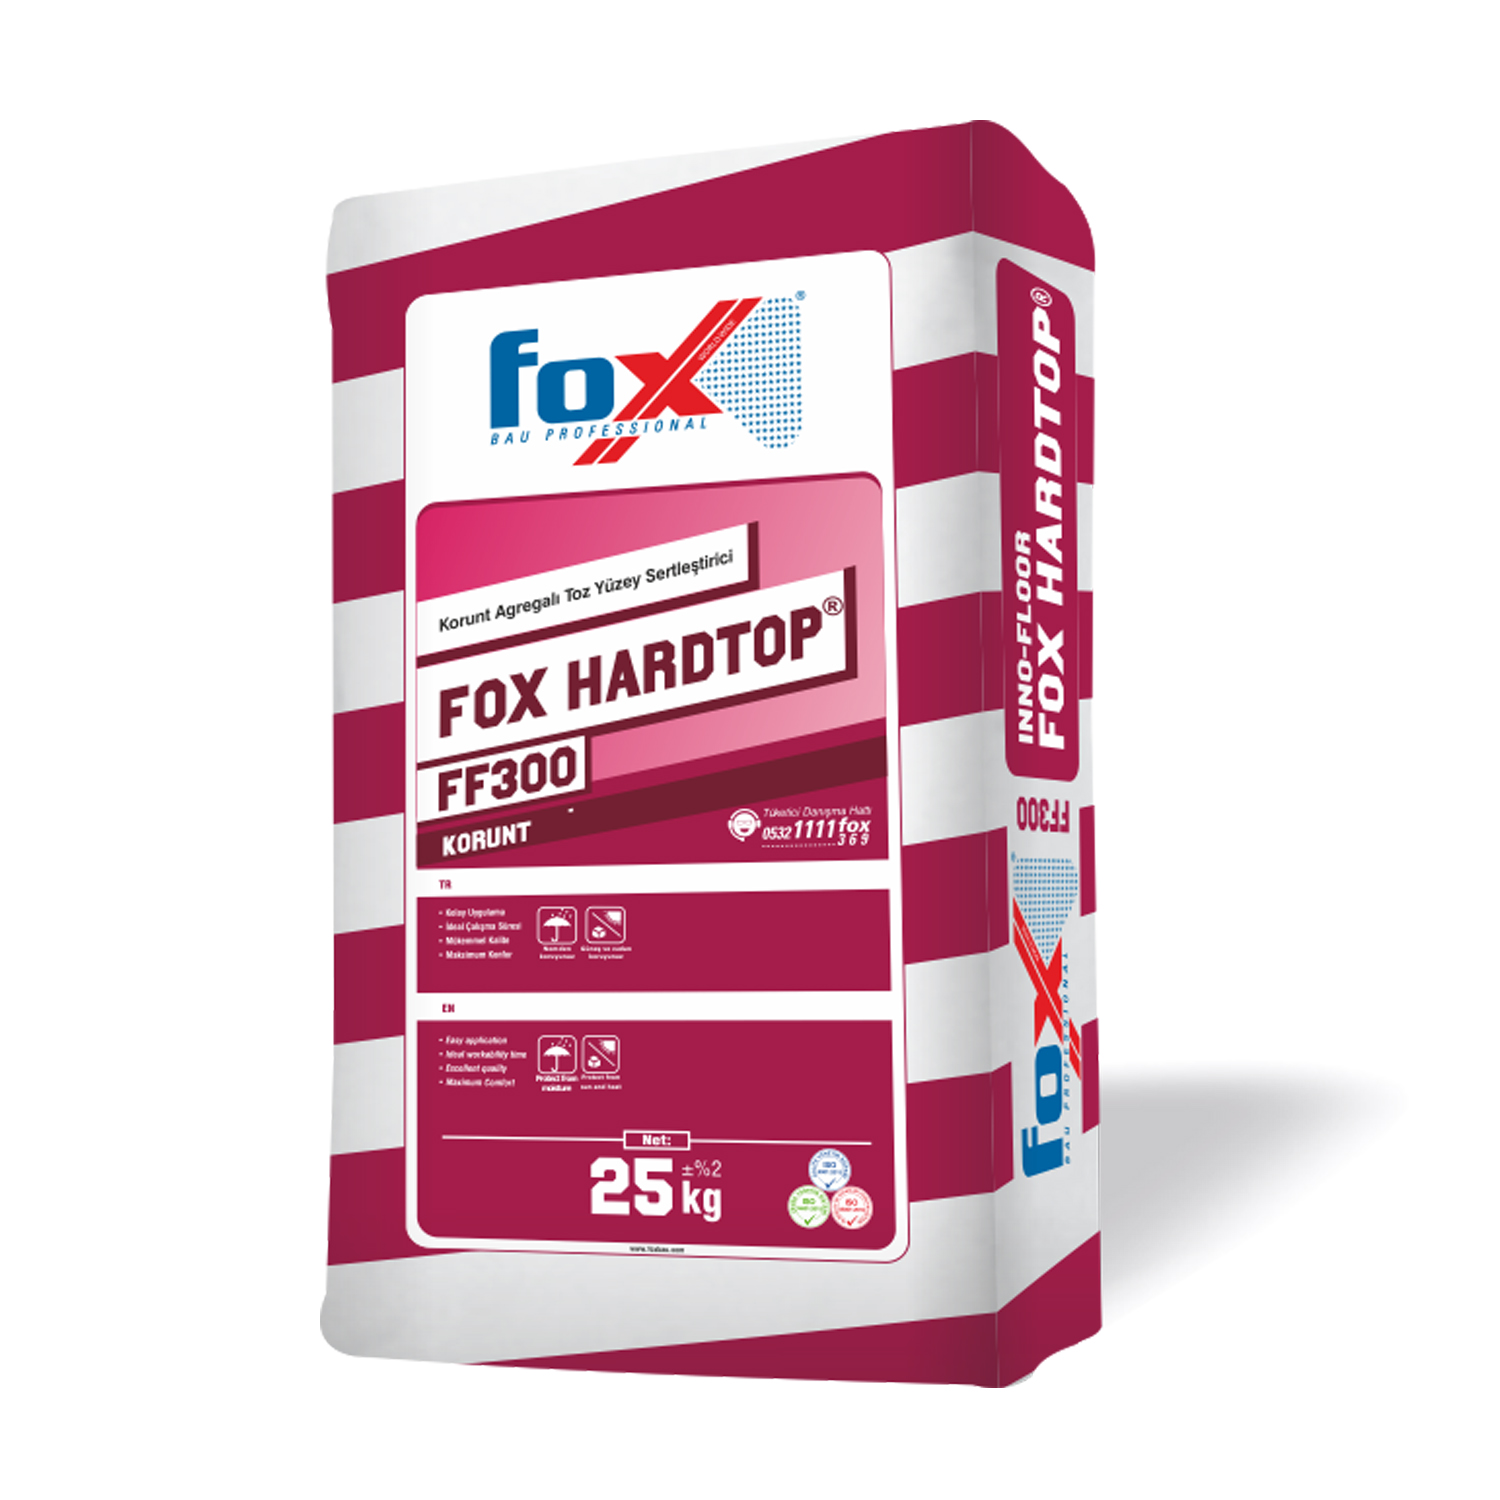 FOX HARDTOP® FF300 KORUNT – Fox Bau Professional